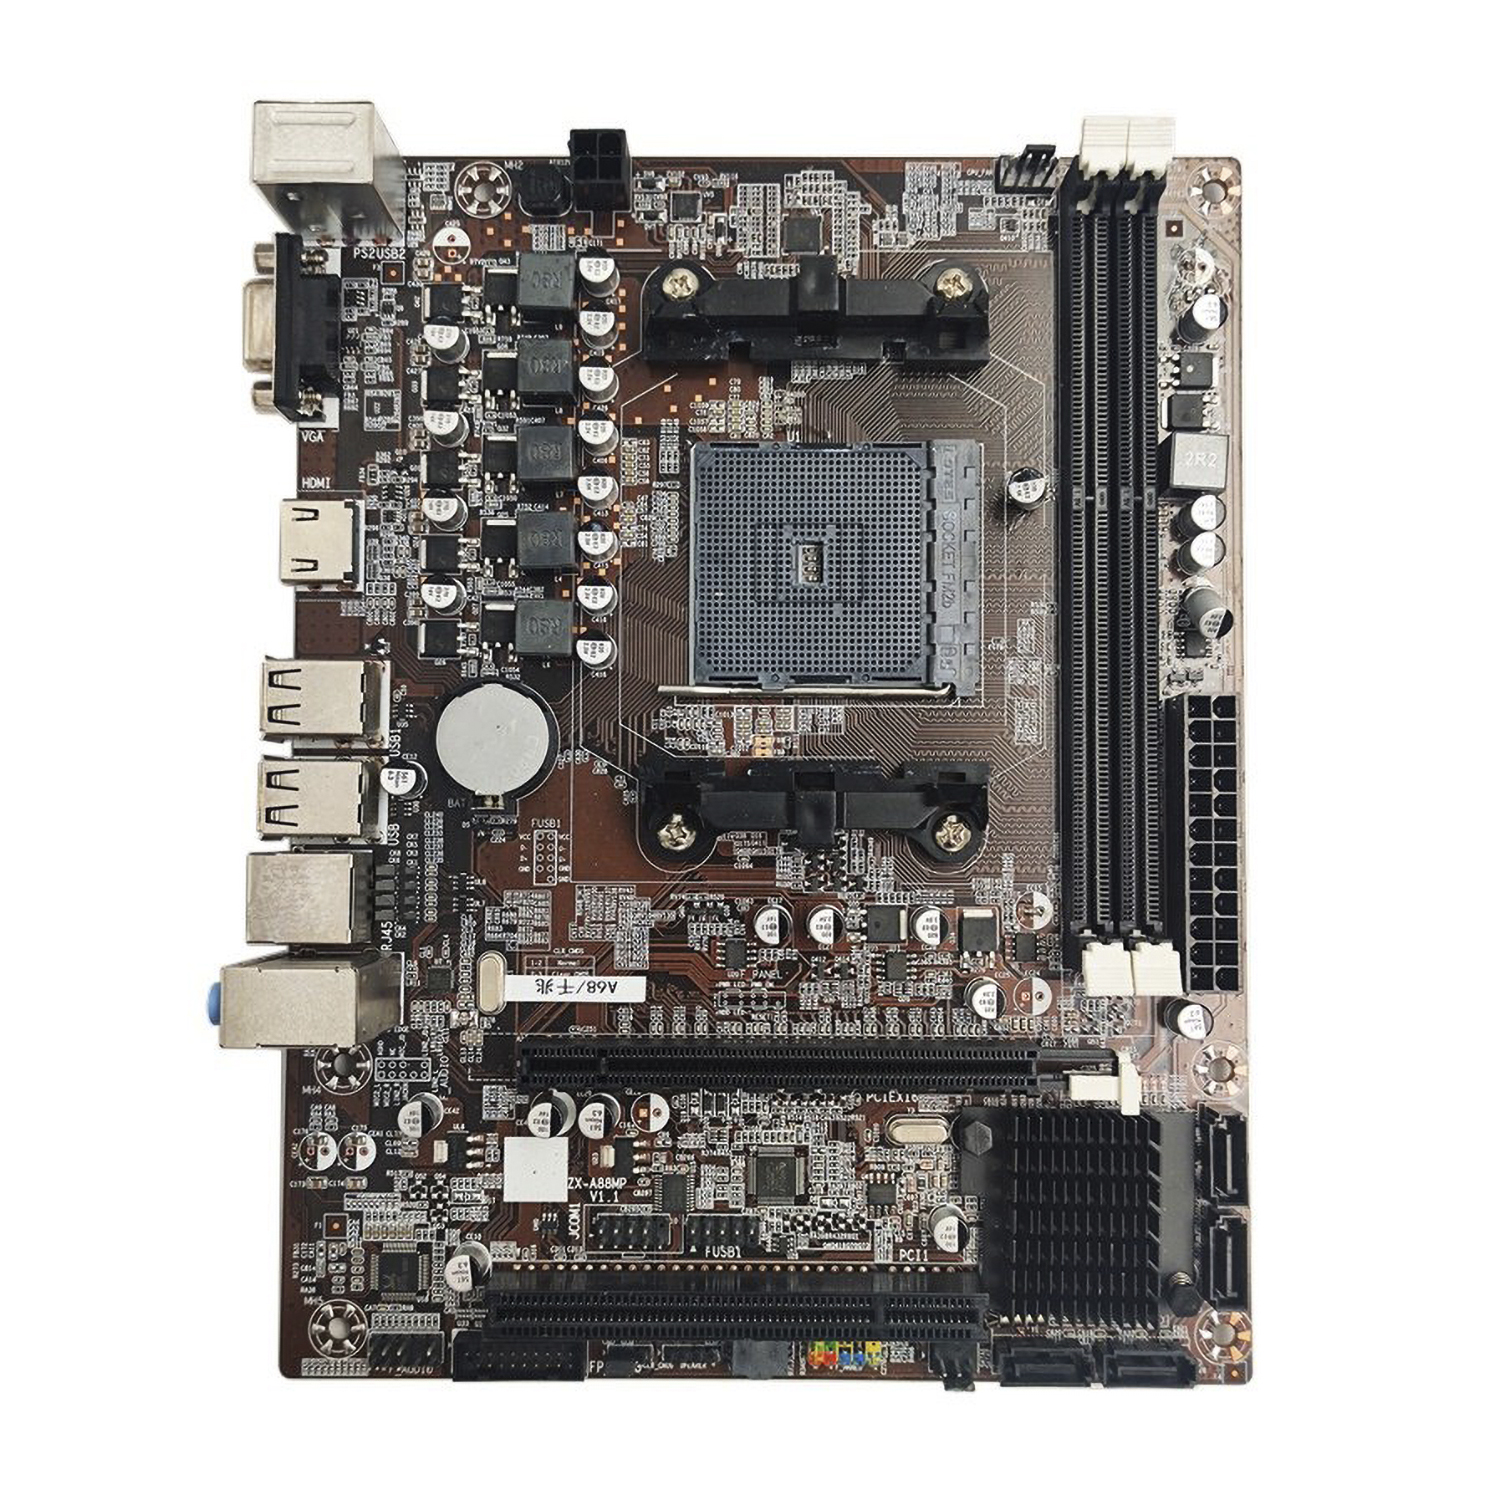 Placa Mãe Arktek Ak-A88M El Socket AM3+ Chipset AMD A88 DDR3 Micro ATX (Sem Caixa)